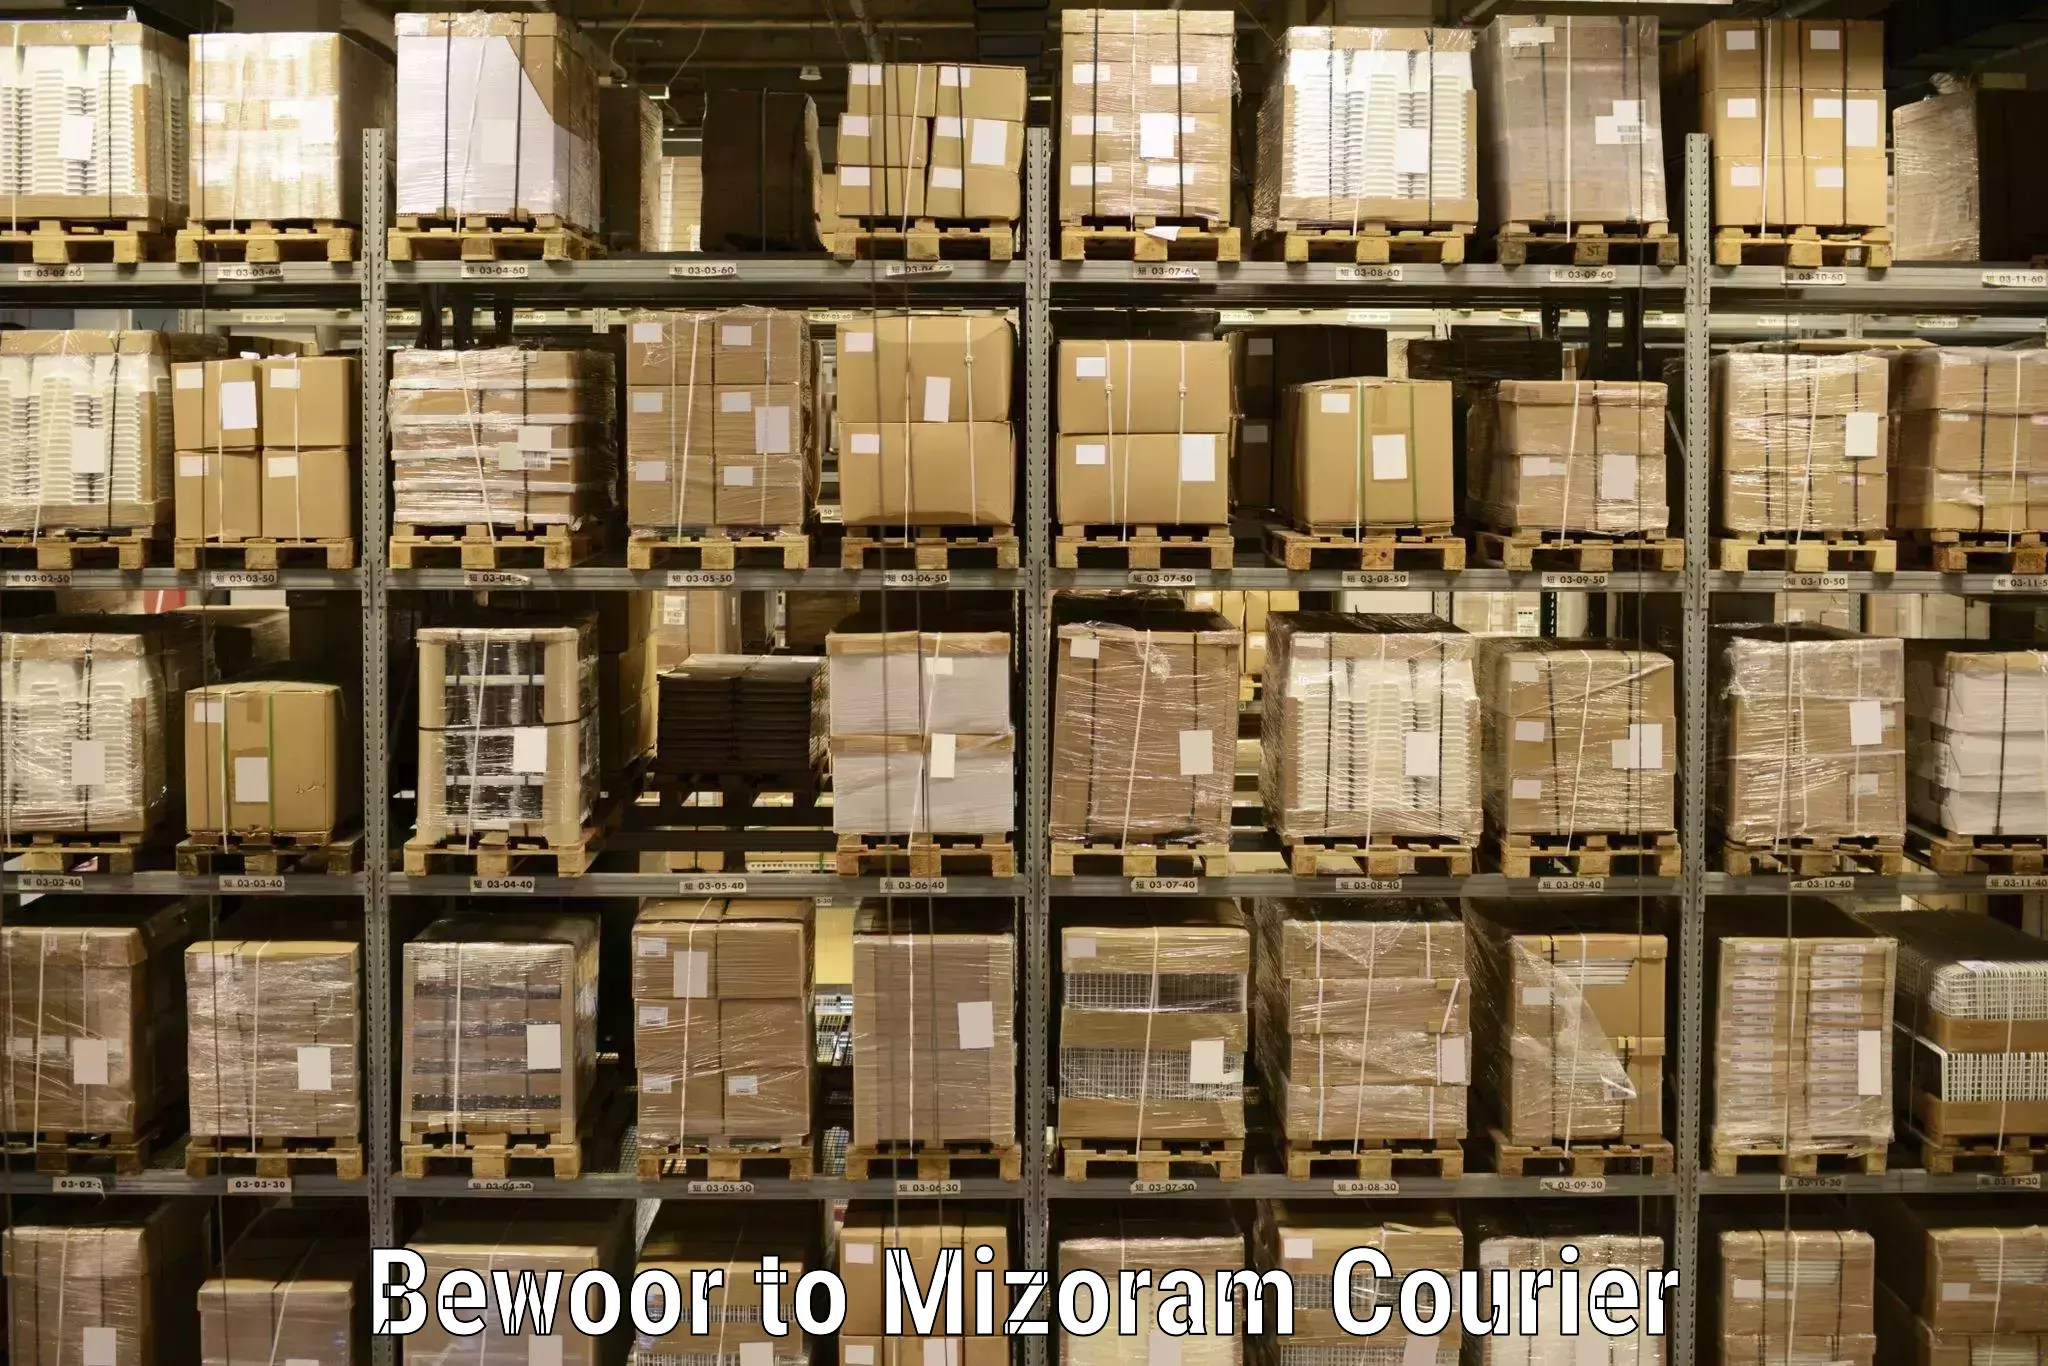 Express mail service Bewoor to Mizoram